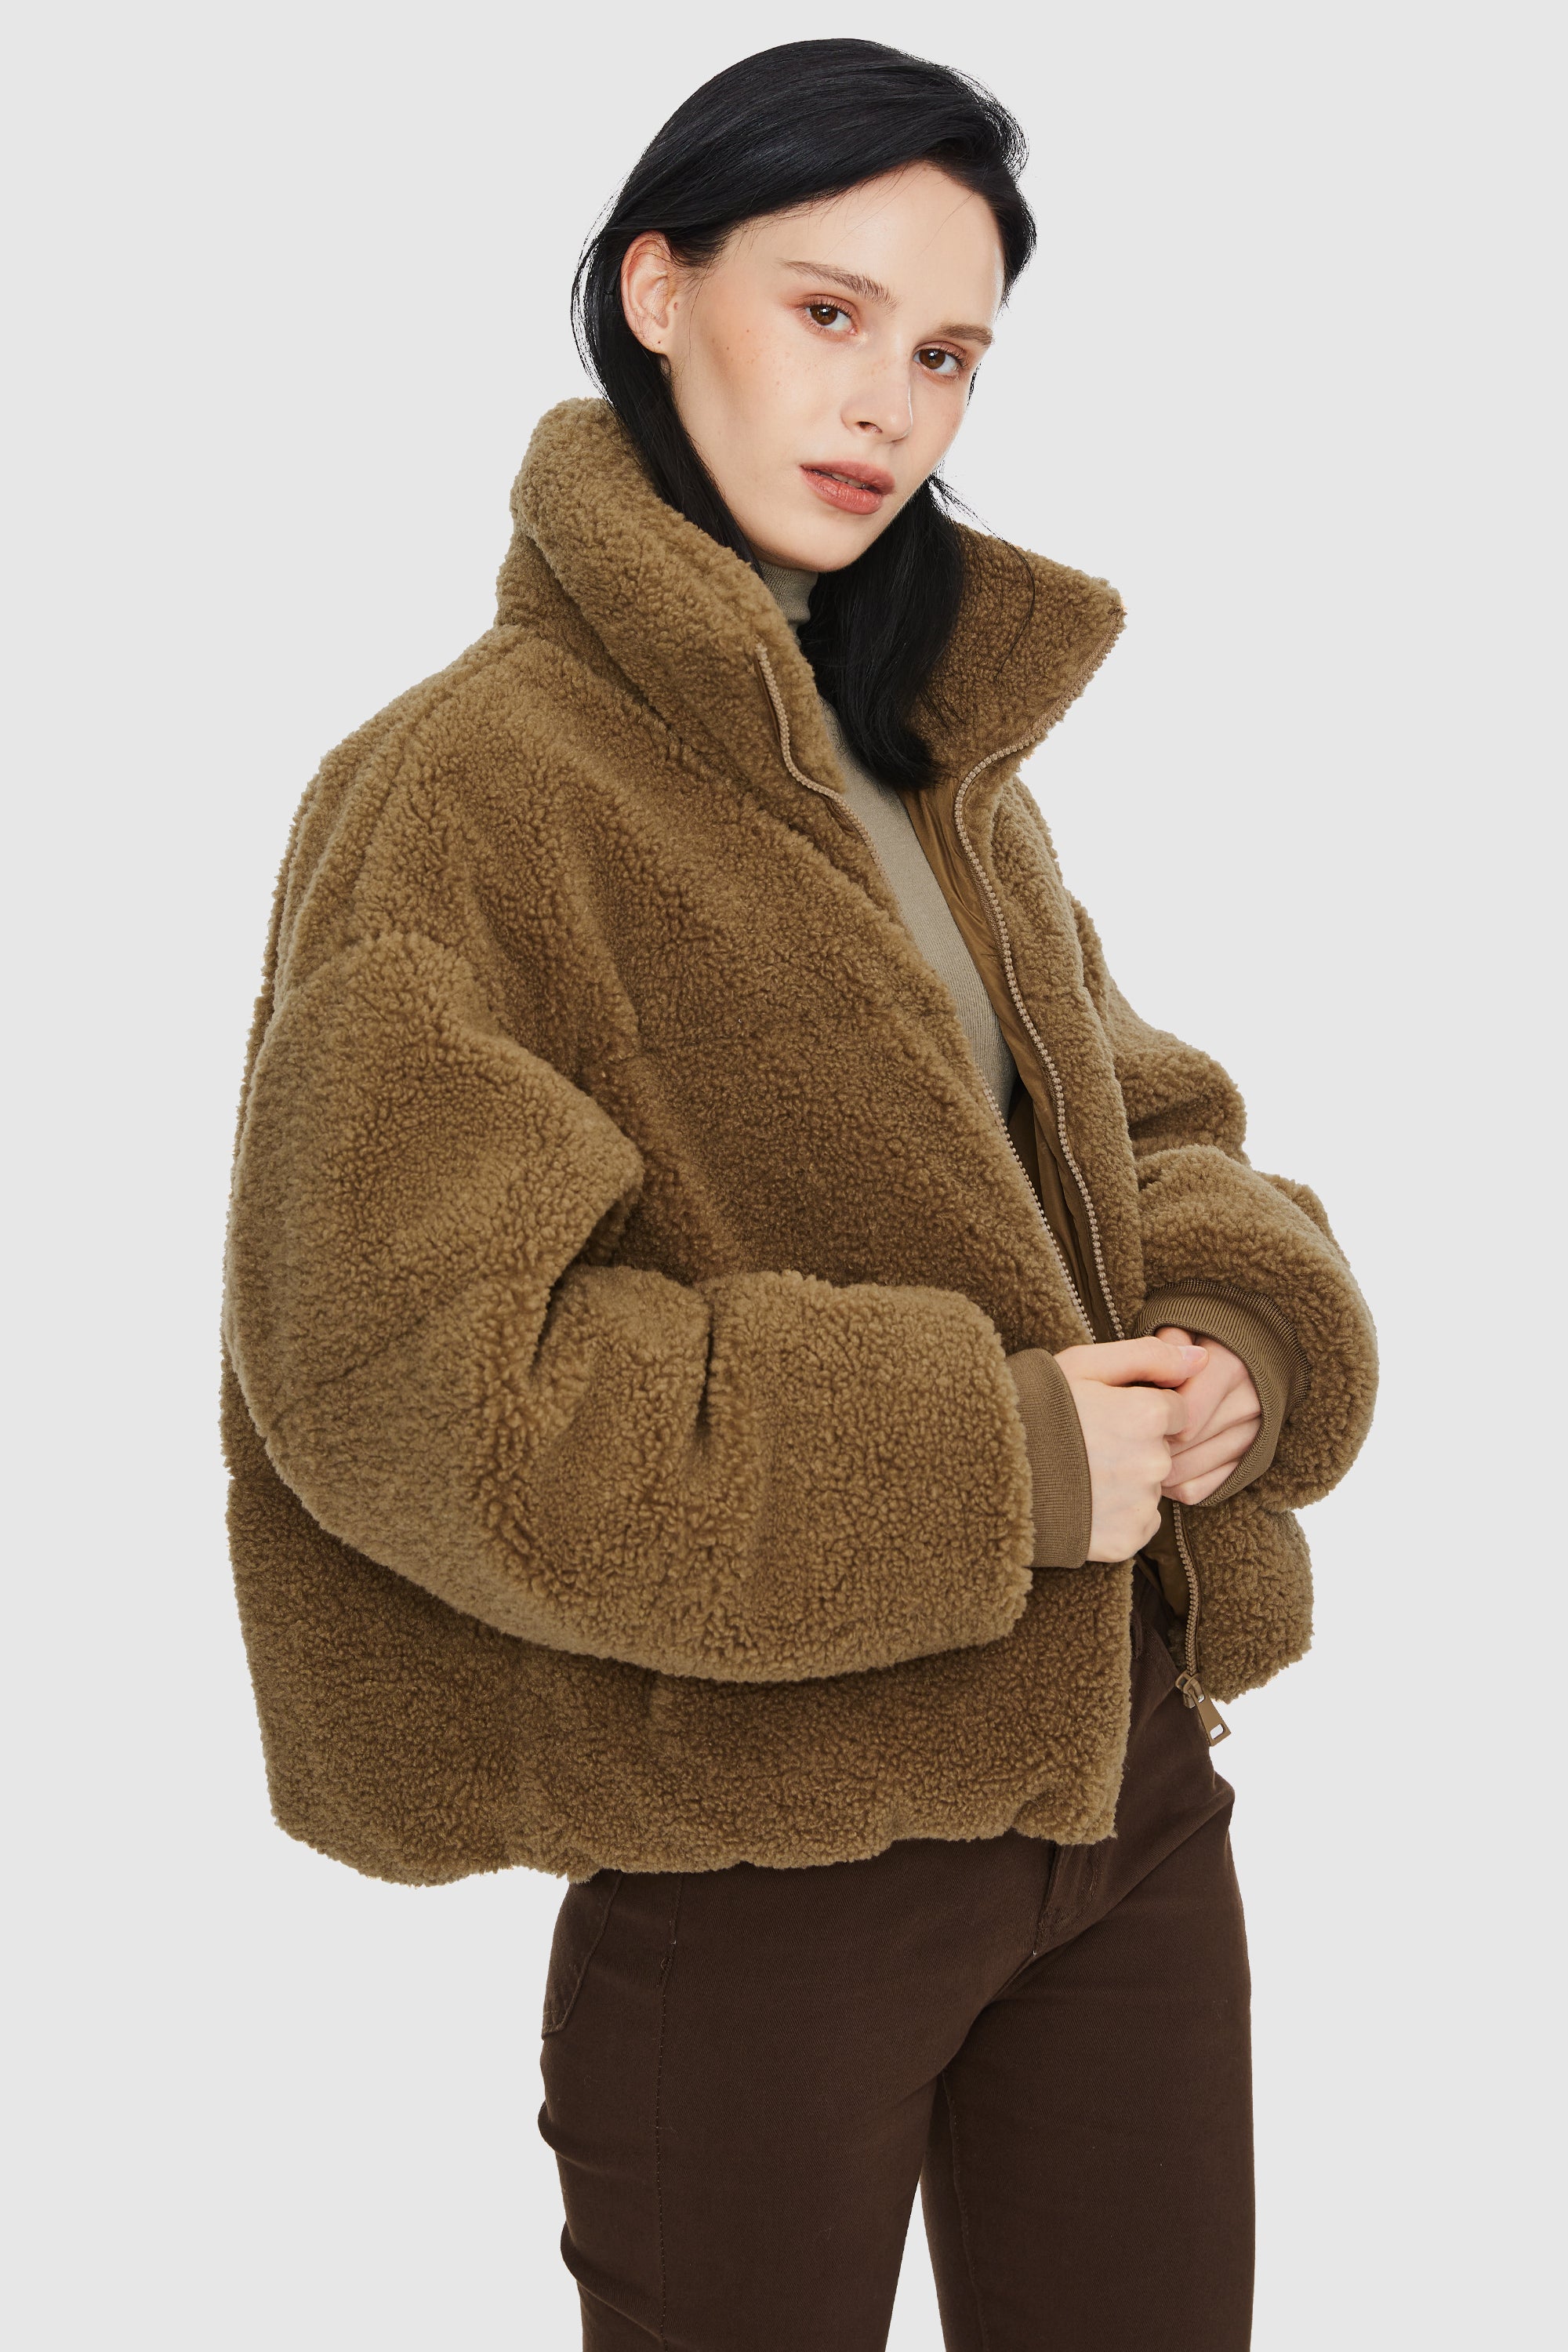 Fuzzy Fleece Cropped Jacket